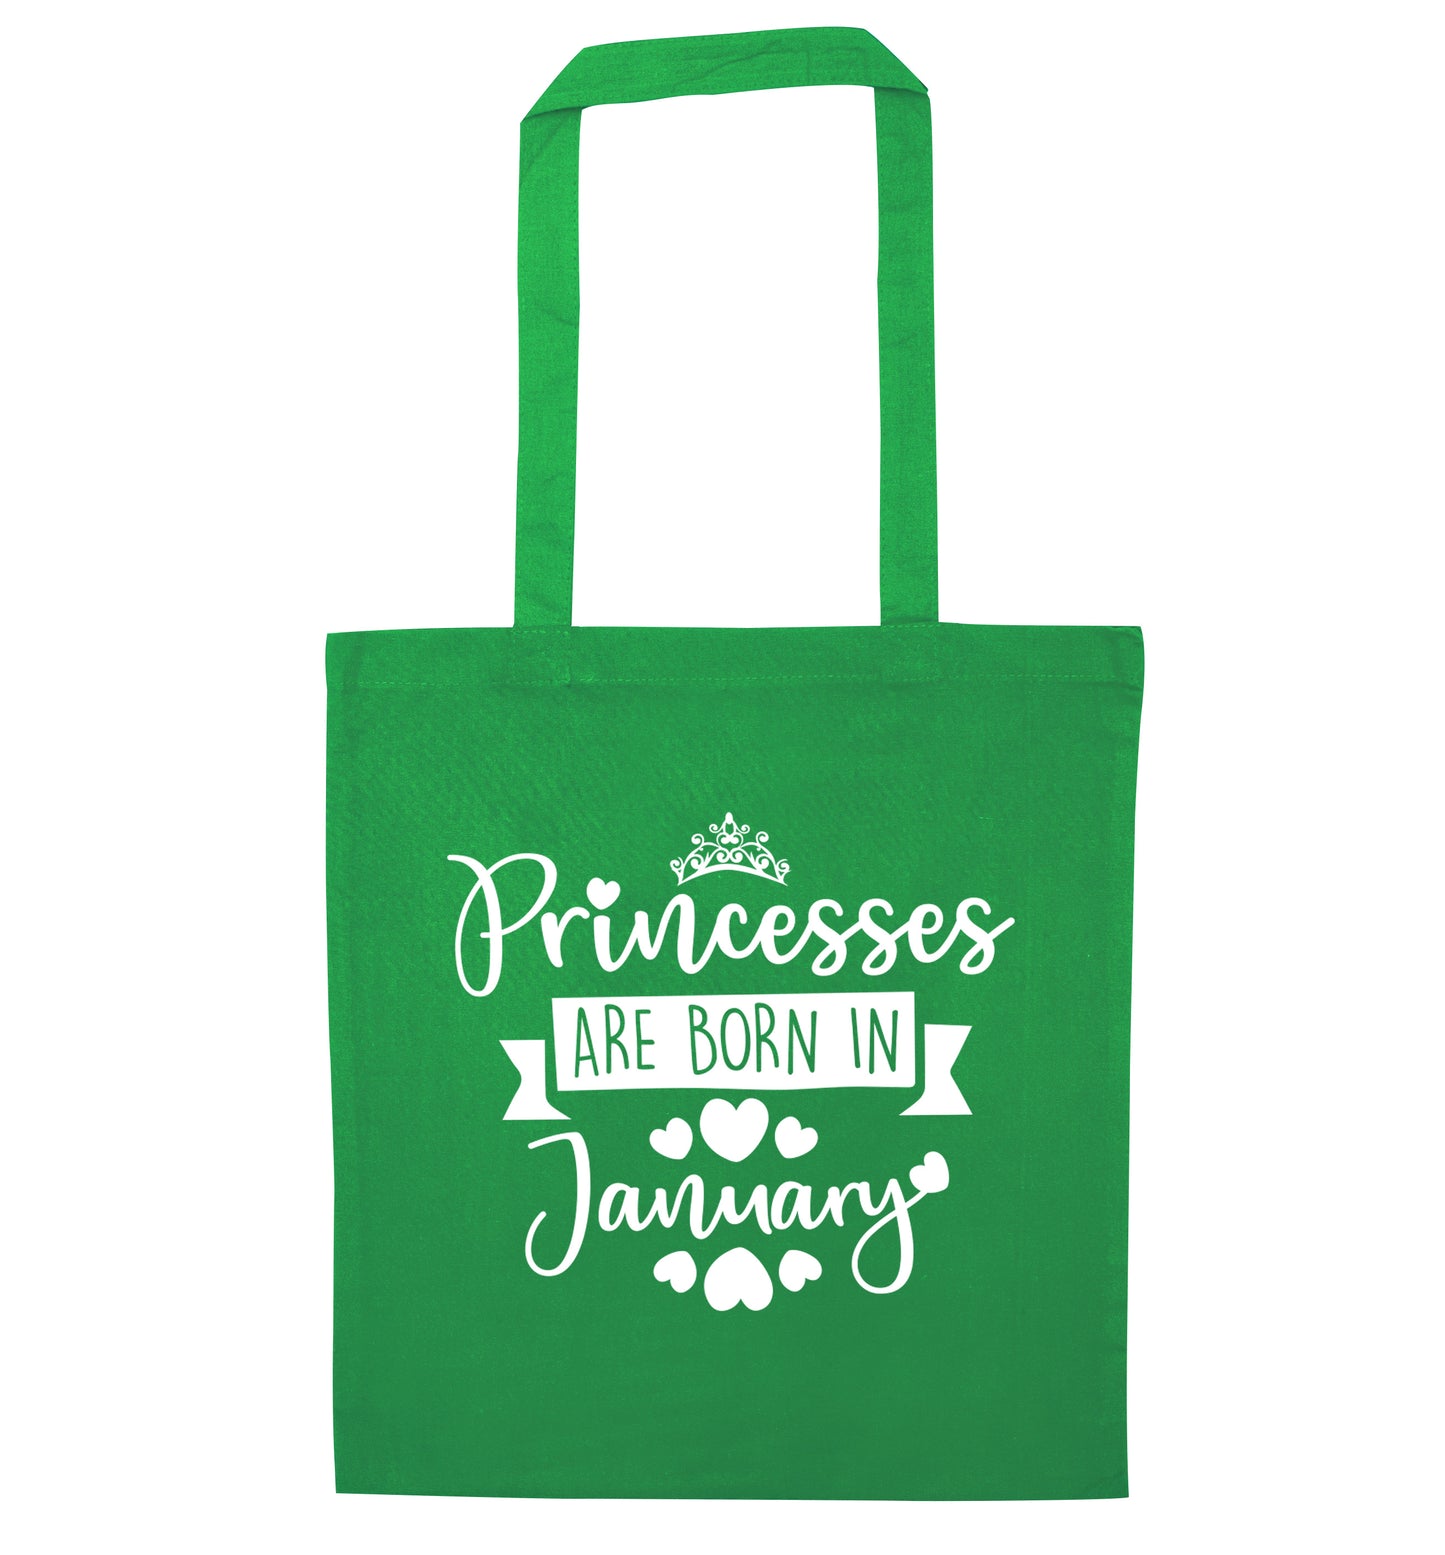 Princesses are born in January green tote bag